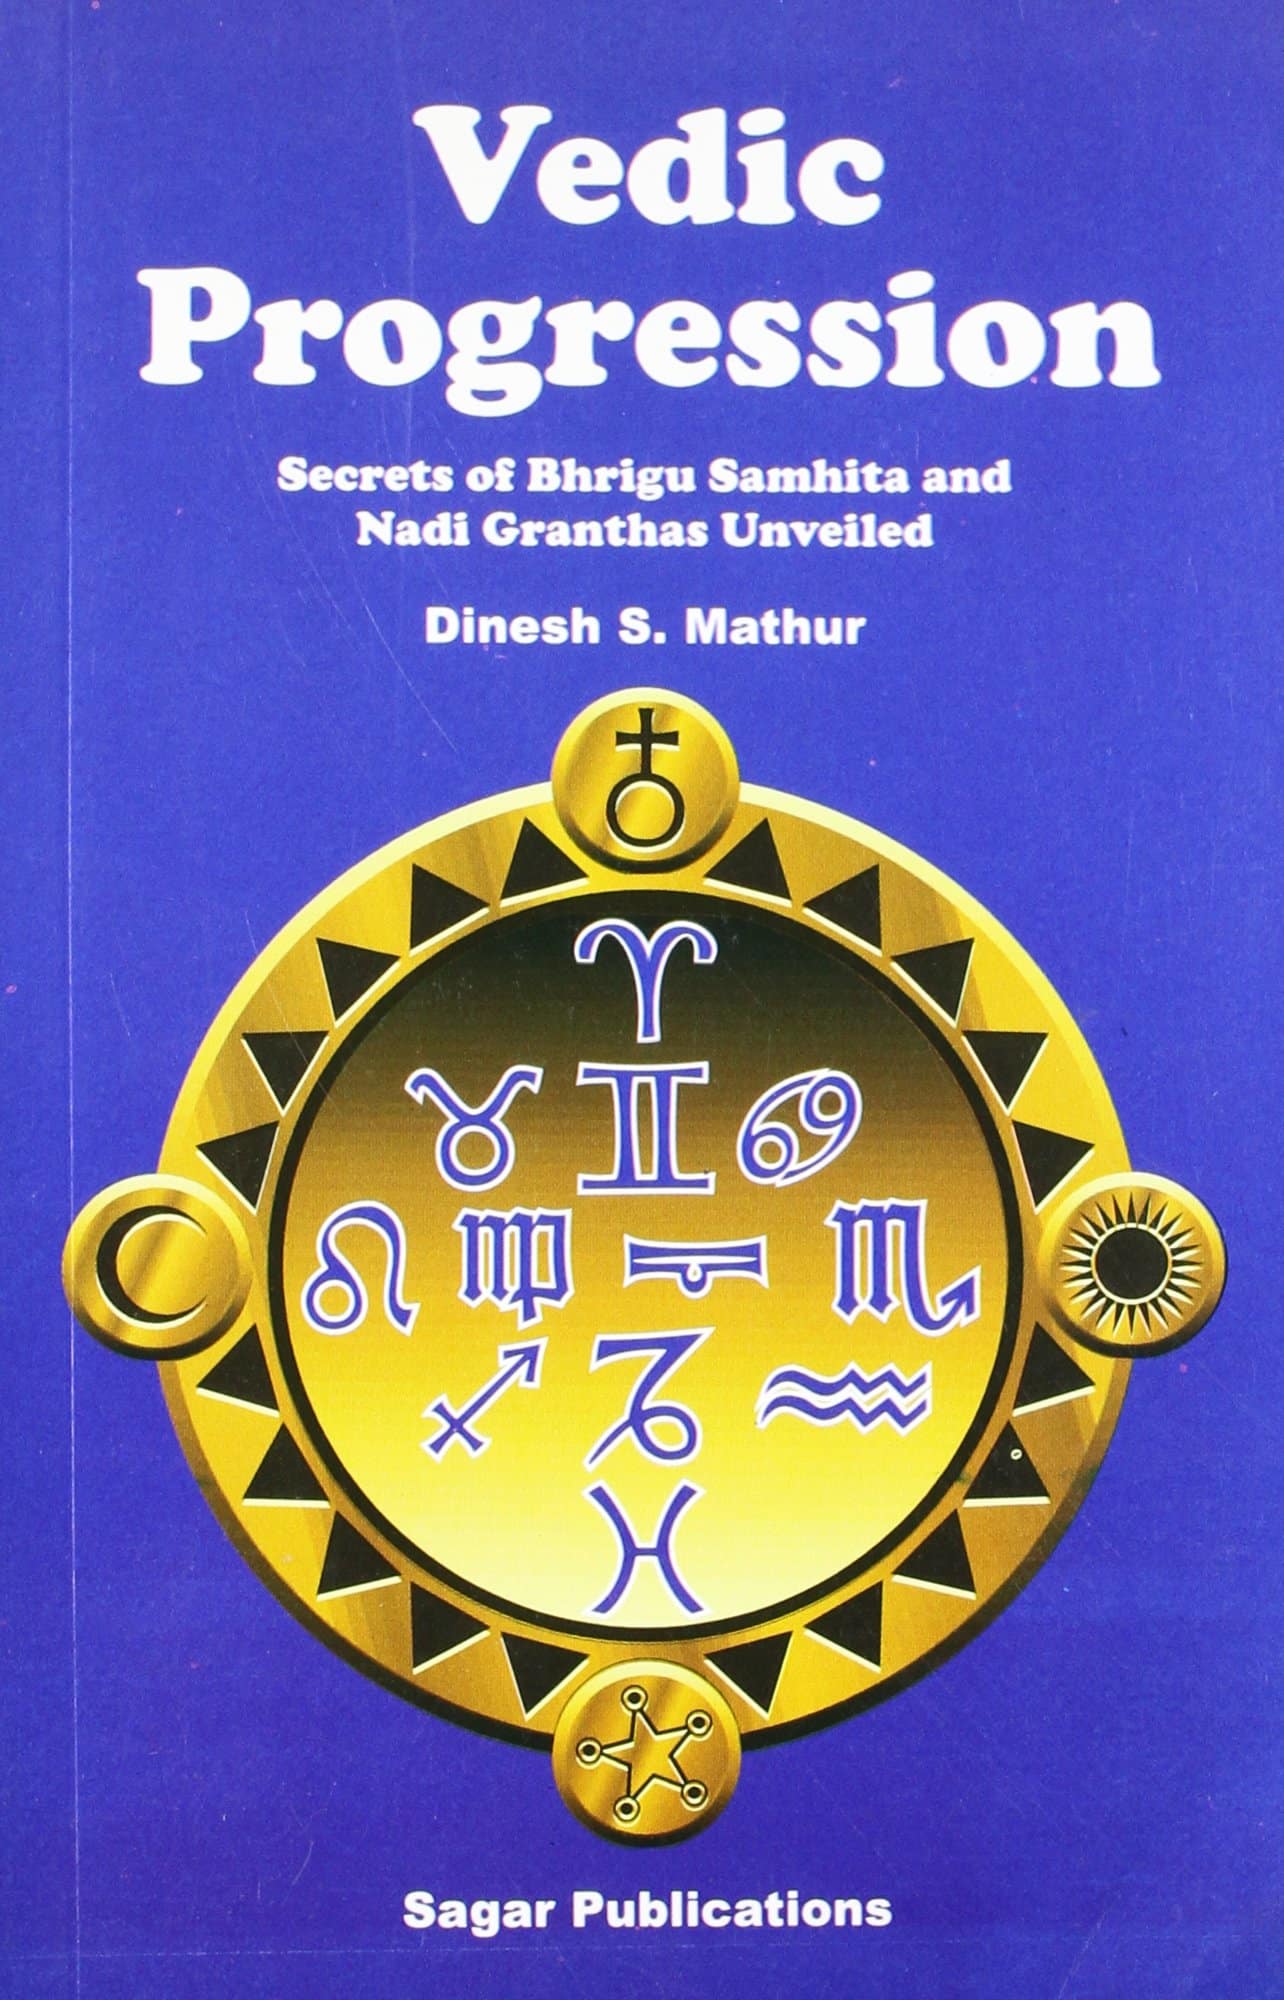 Vedic progression Dinesh S. Mathur